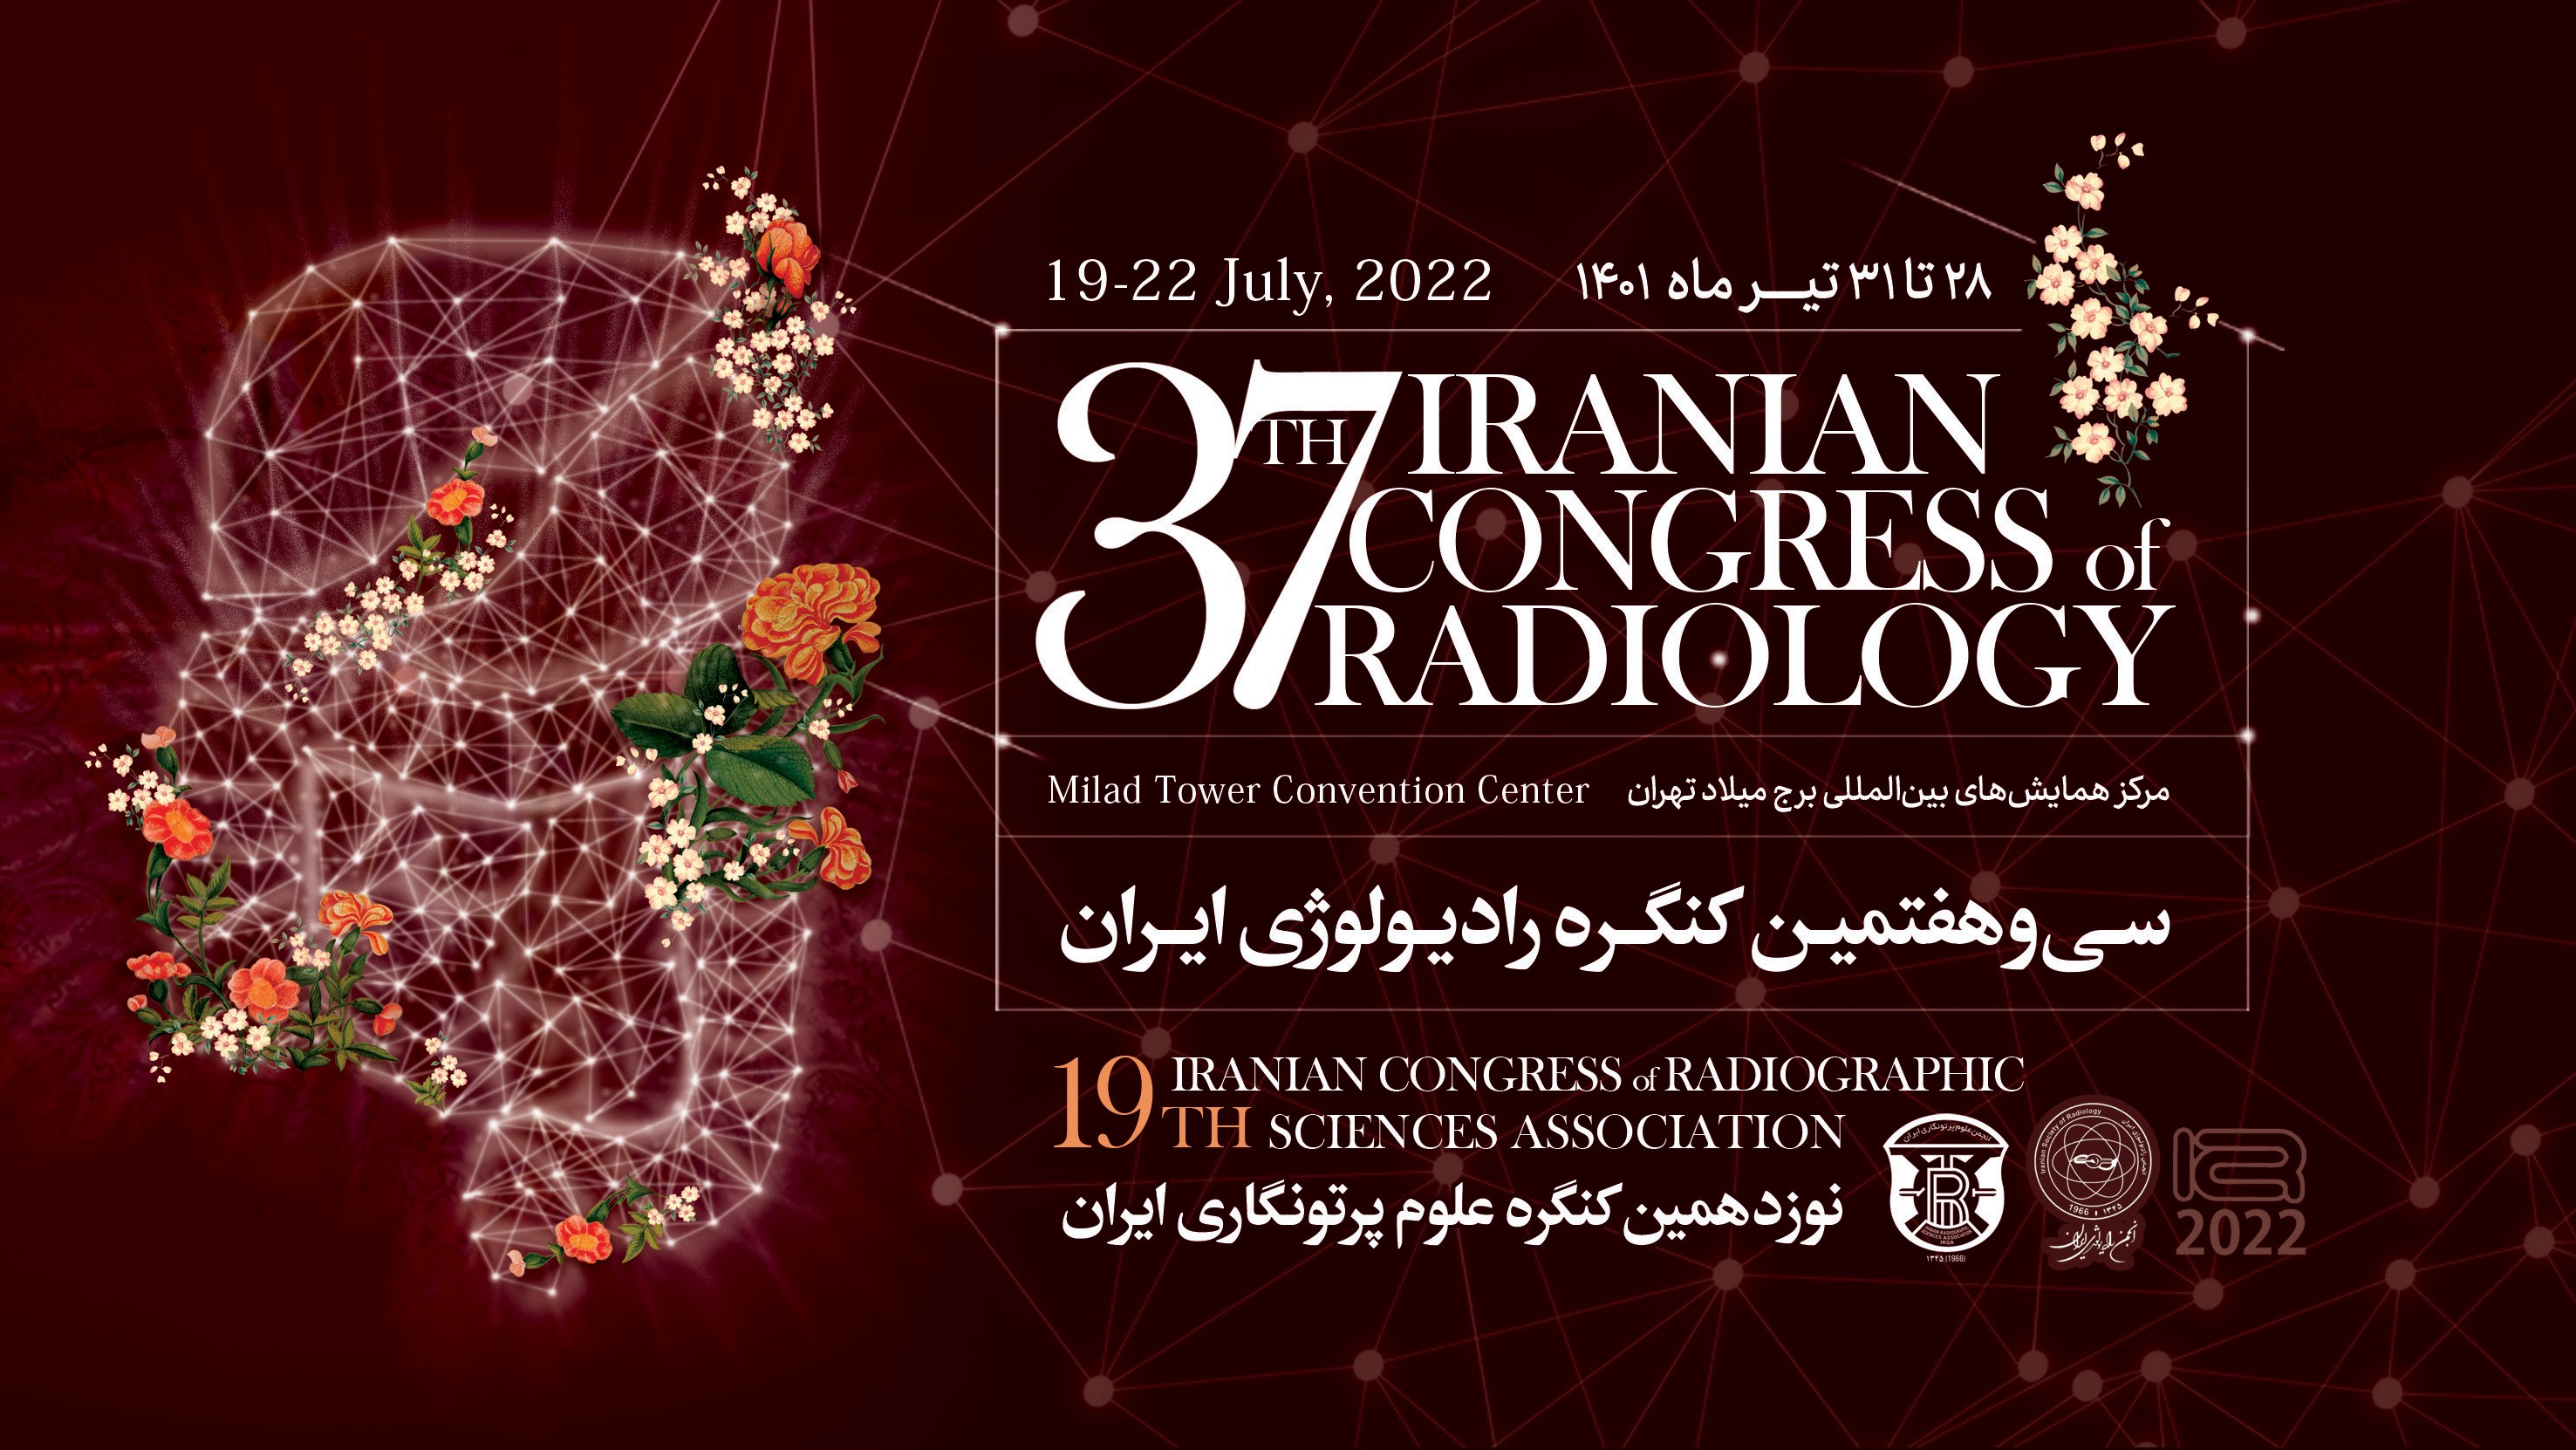 Iranian Congress of Radiology